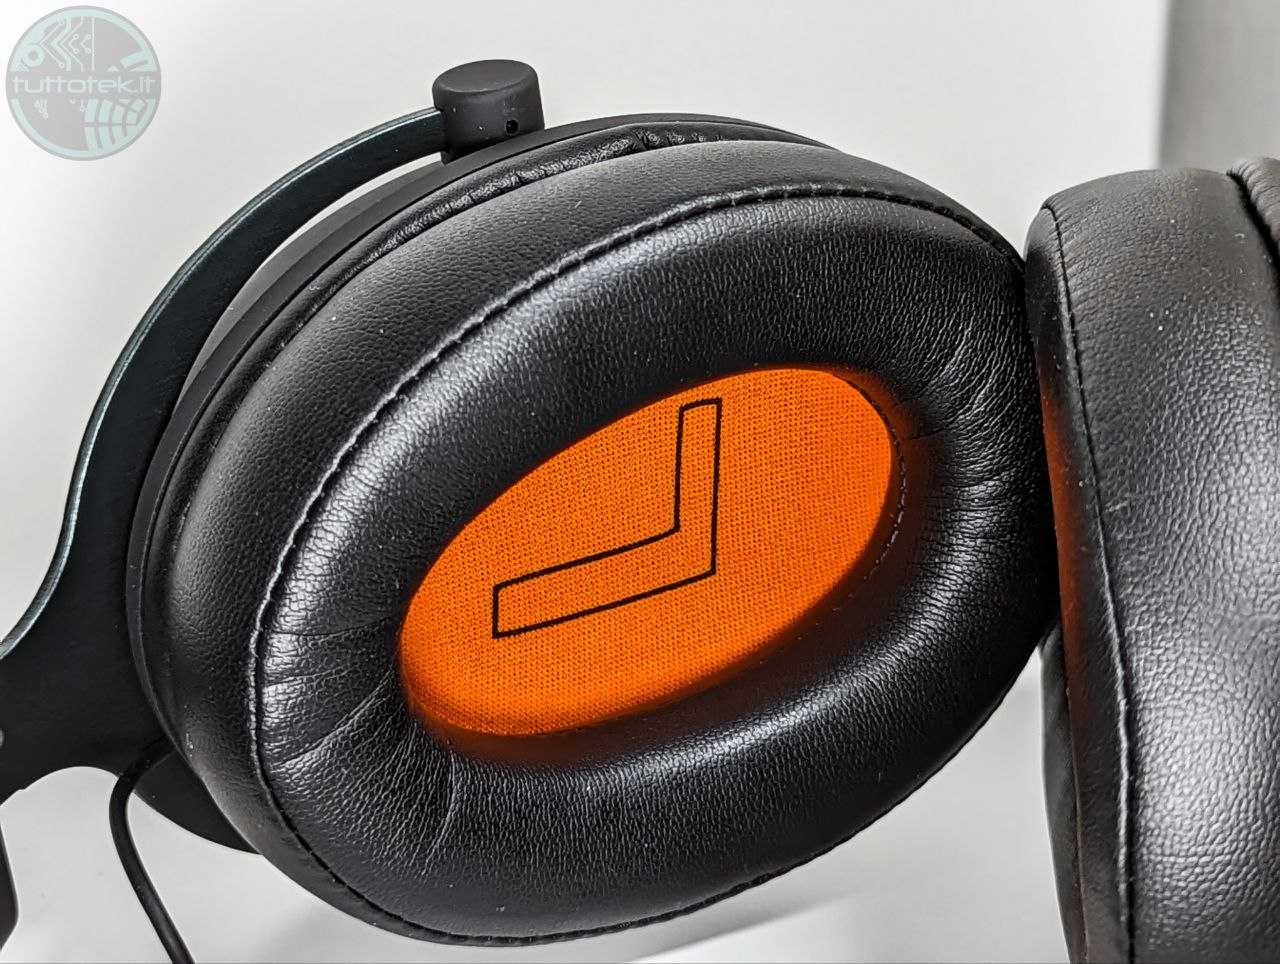 Fnatic React review: the best headphones under €100?